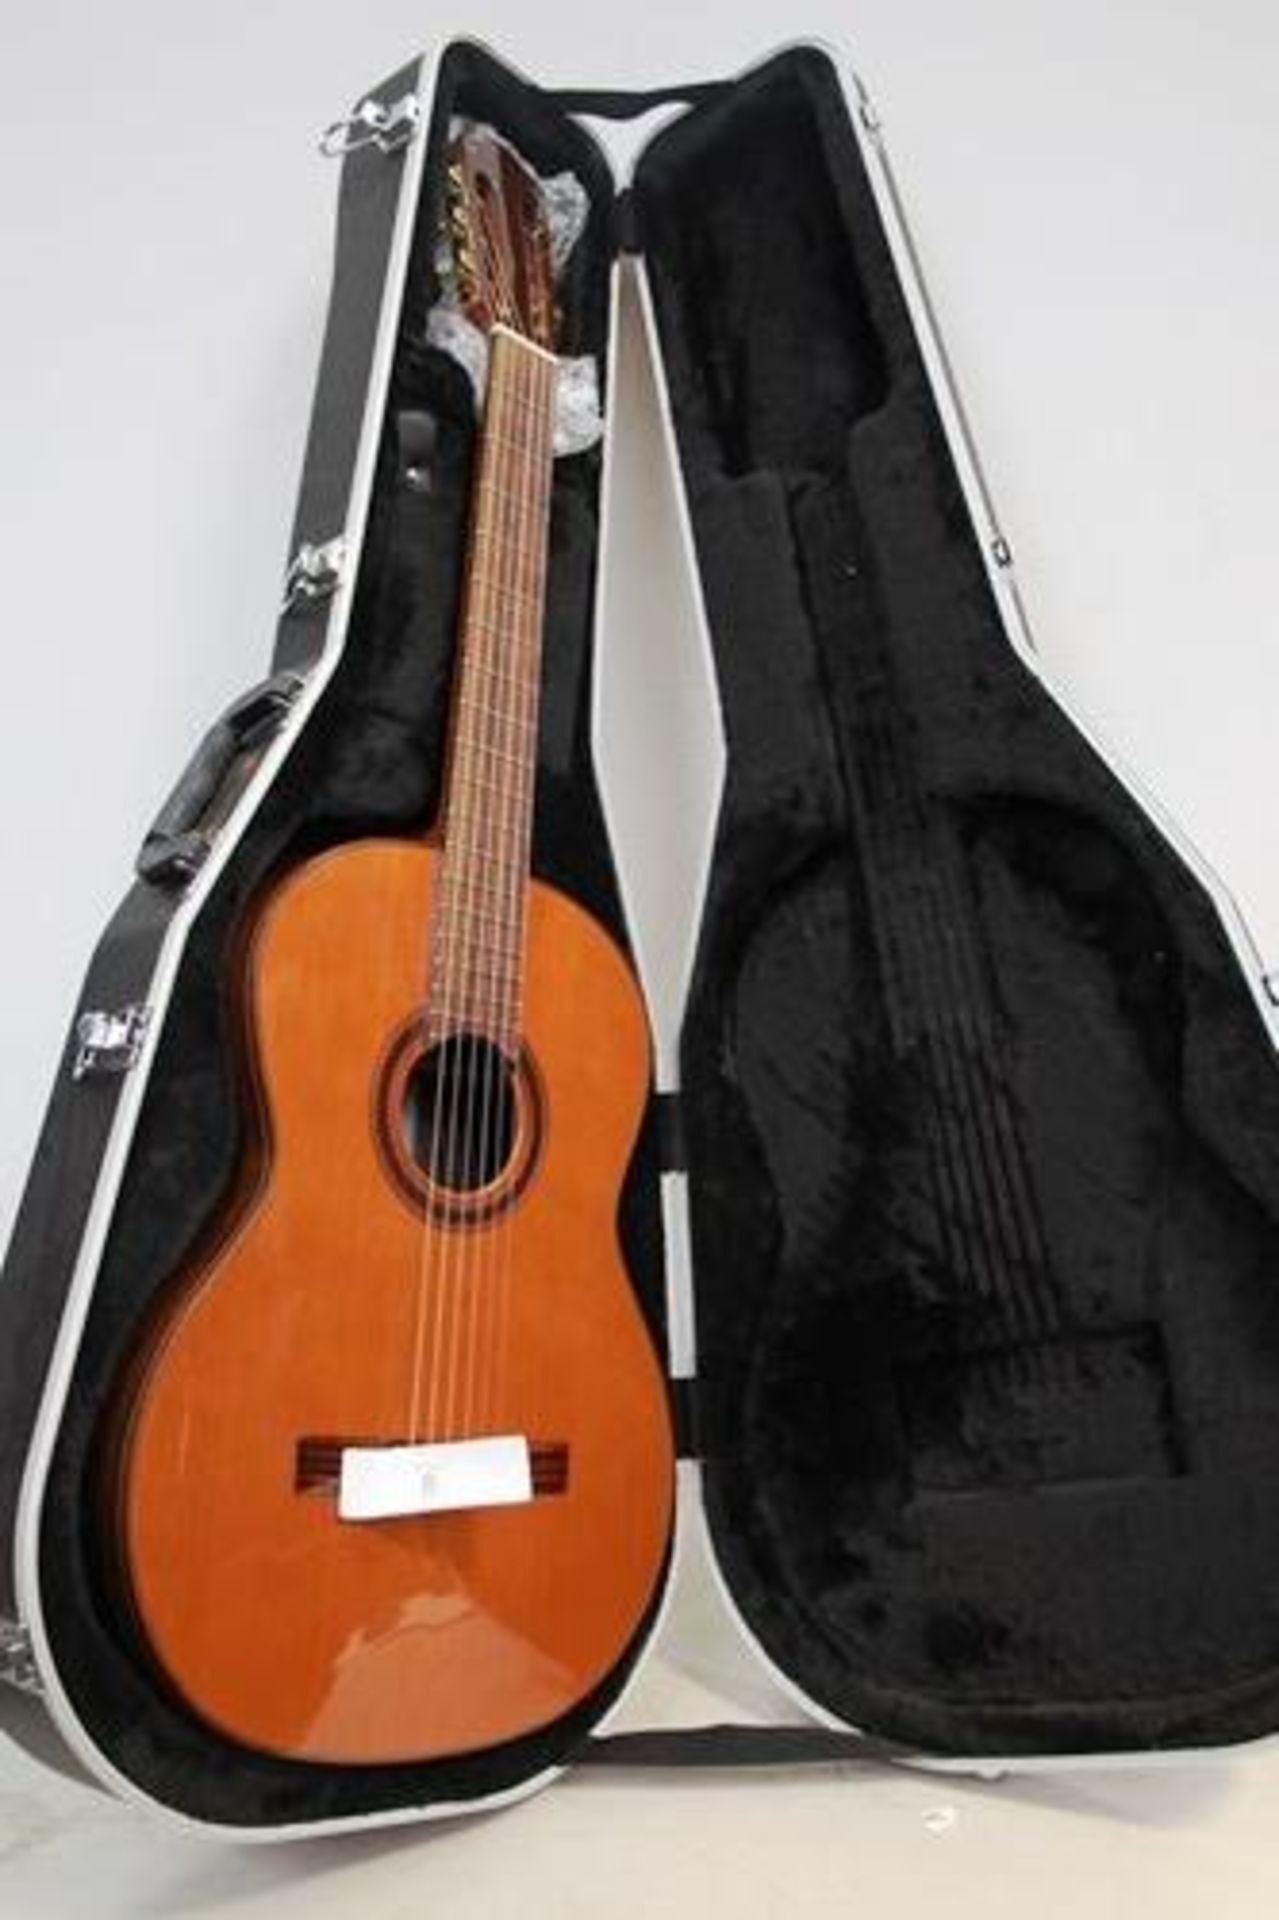 1 x Cordoba Iberia Series model C7CD acoustic guitar, together with Gator hard guitar case -